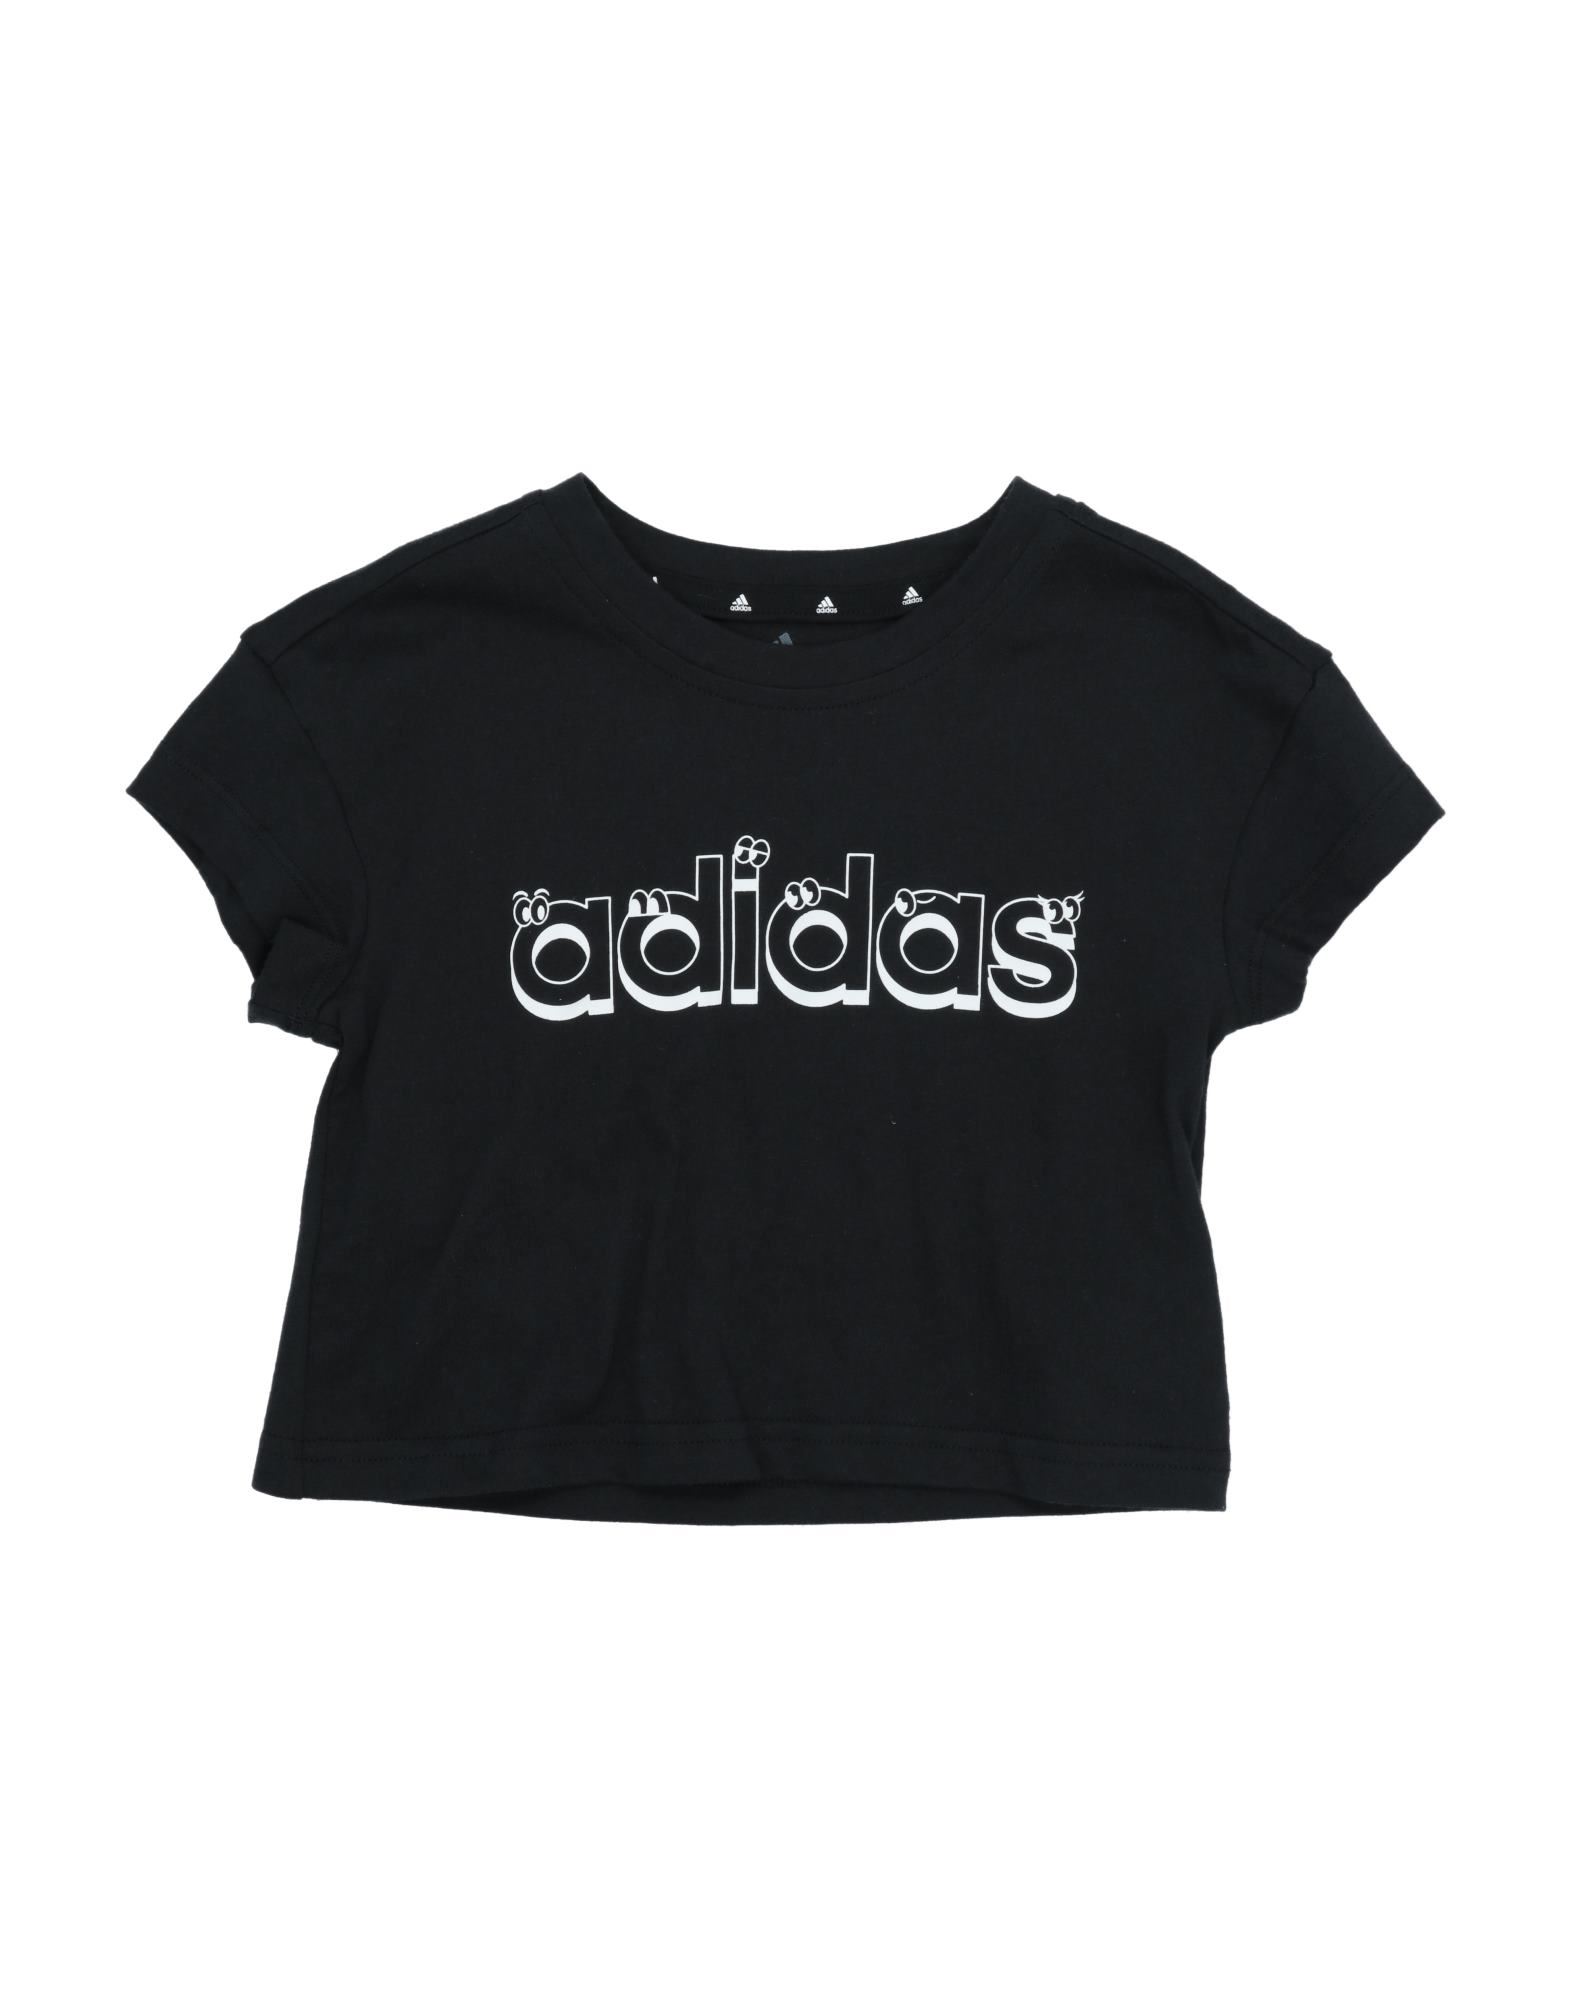 Adidas Originals Kids' Adidas T-shirts In Black